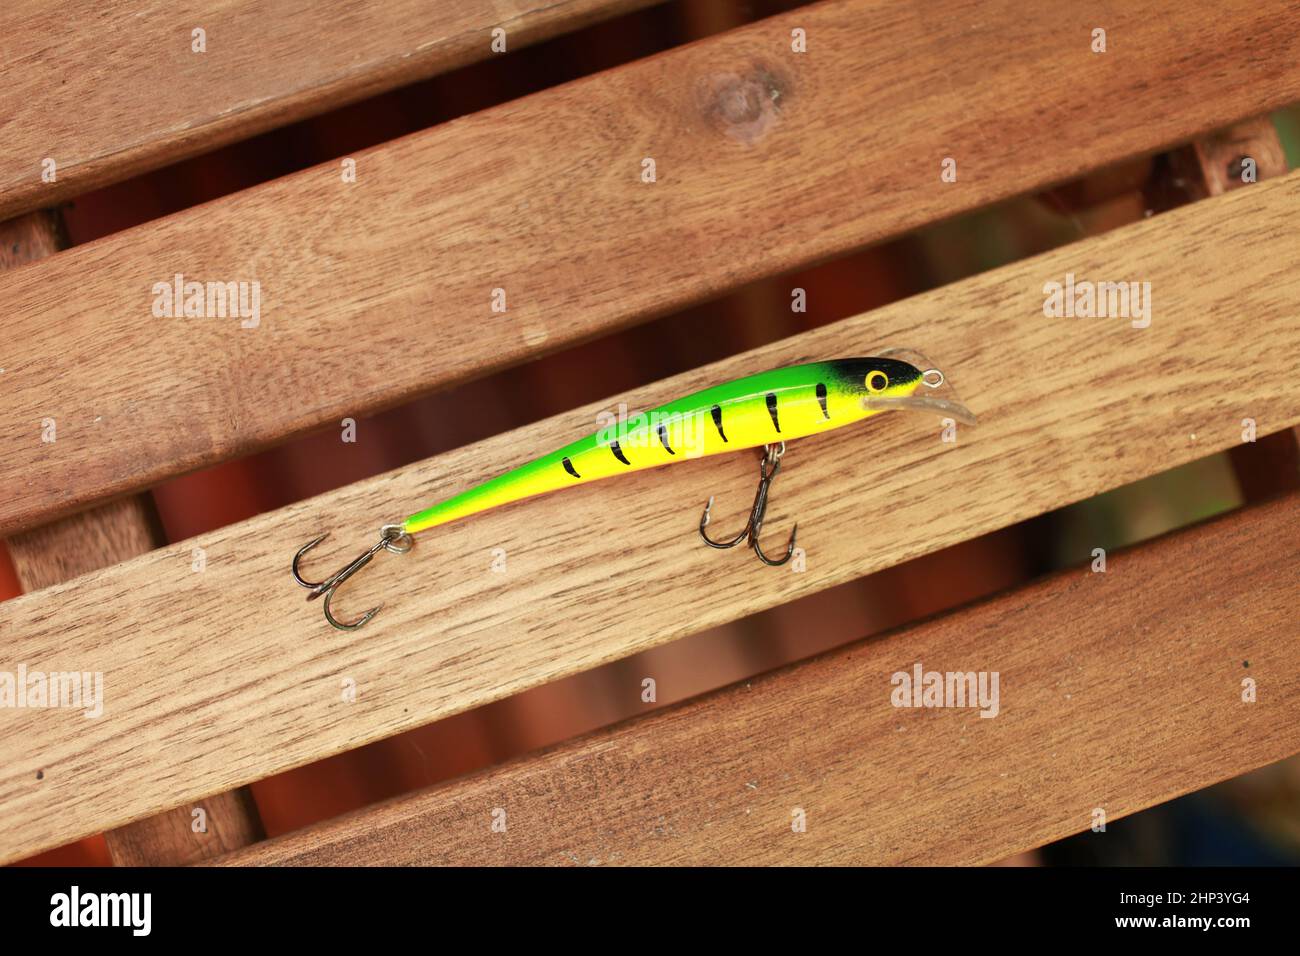 https://c8.alamy.com/comp/2HP3YG4/homemade-wobbler-for-fishing-large-fish-on-the-wooden-deck-2HP3YG4.jpg